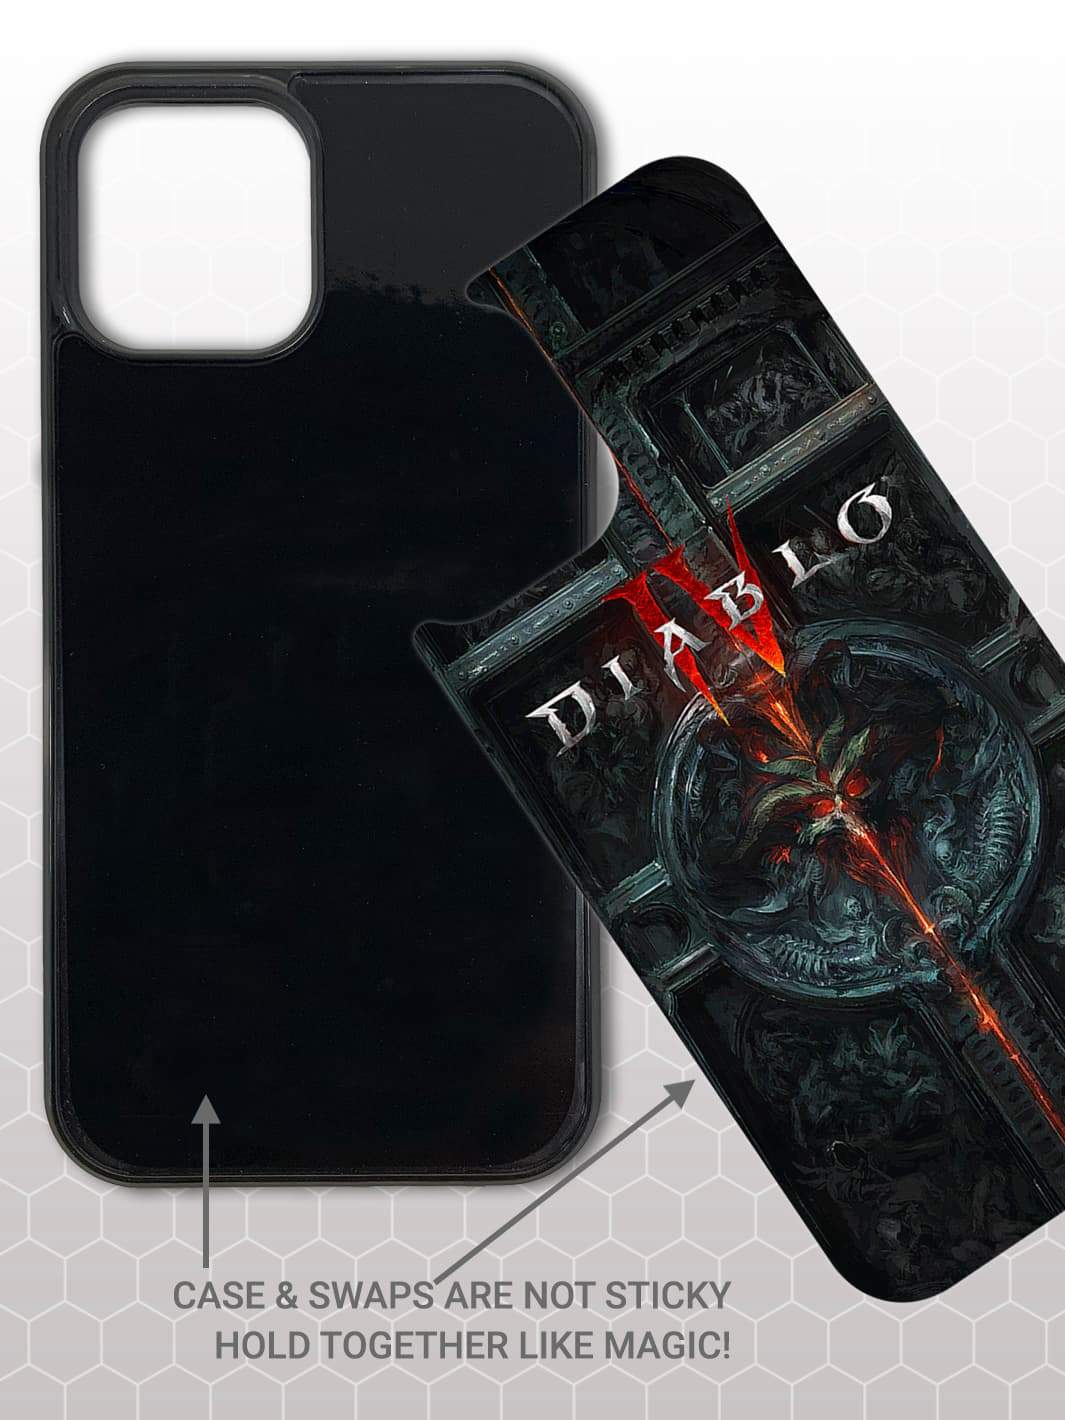 Phone Case Set - Diablo